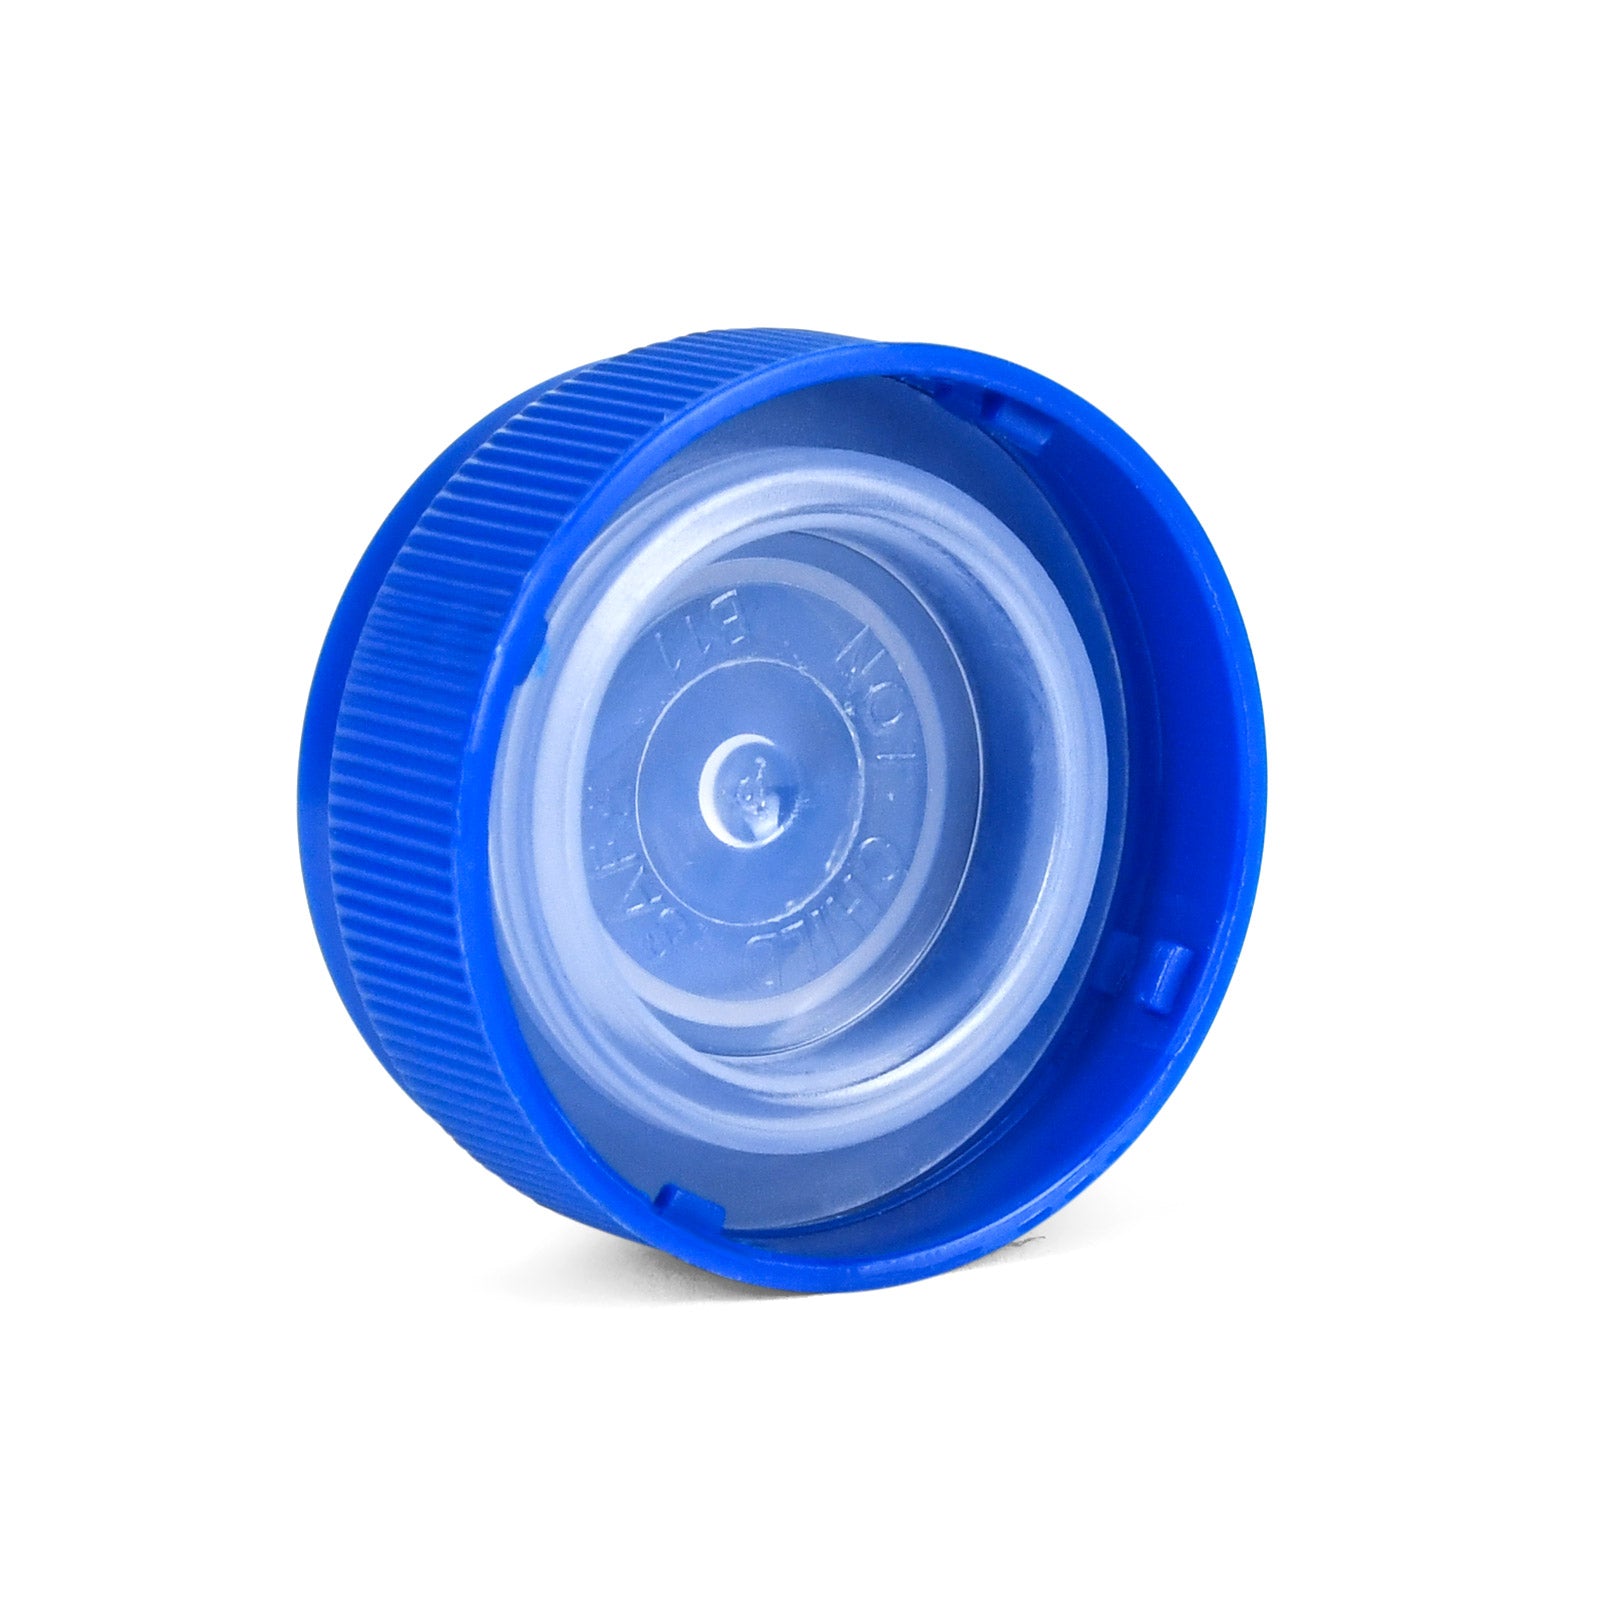 8 Dram Reversible Cap Opaque Blue - 410 Count